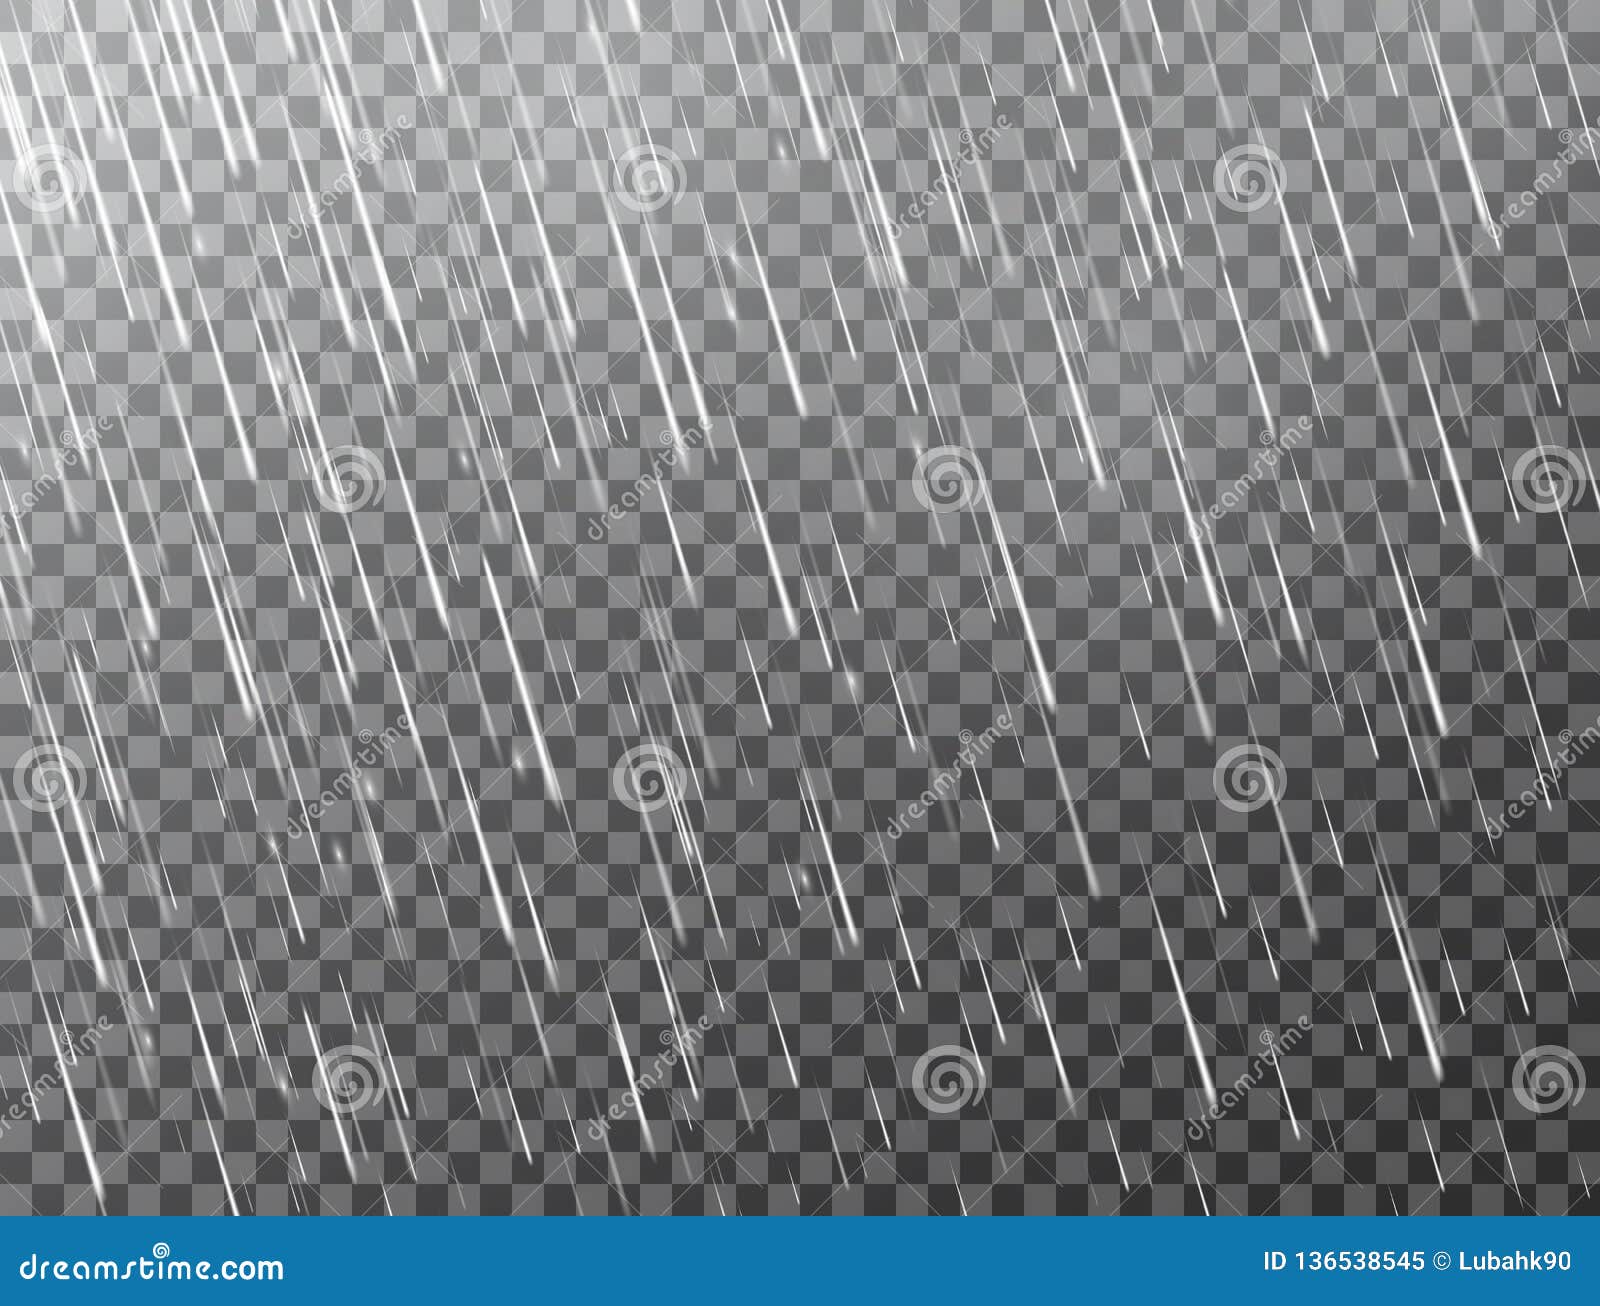 realistic rain on transparent background. falling water drops. rainfall texture. rain storm. rainy cloudy backdrop. 